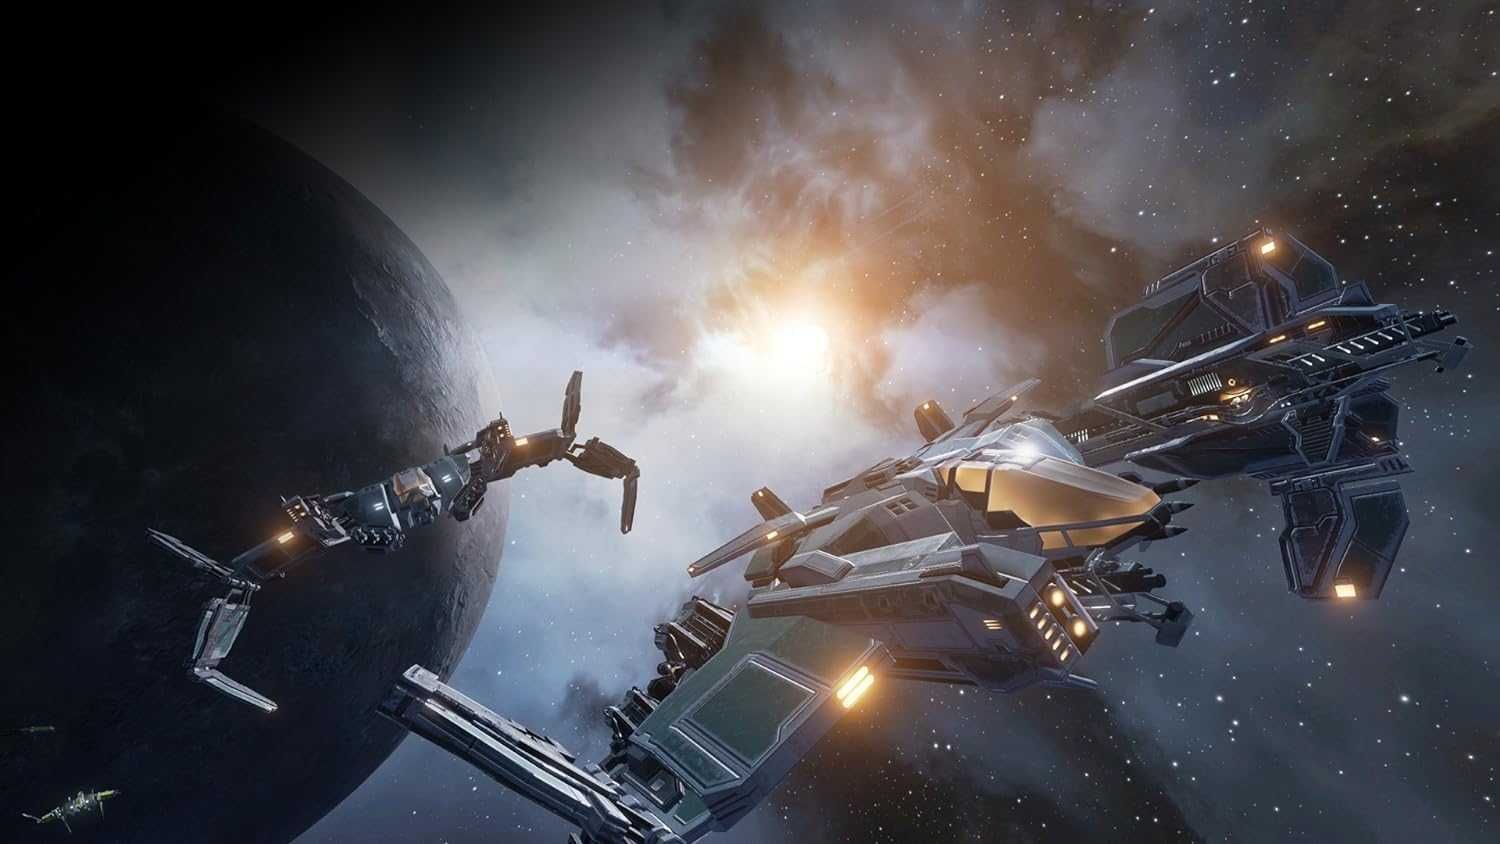 EVE Valkyrie PS4 - znakomita gra sci-fi, statek kosmiczny, na gogle VR